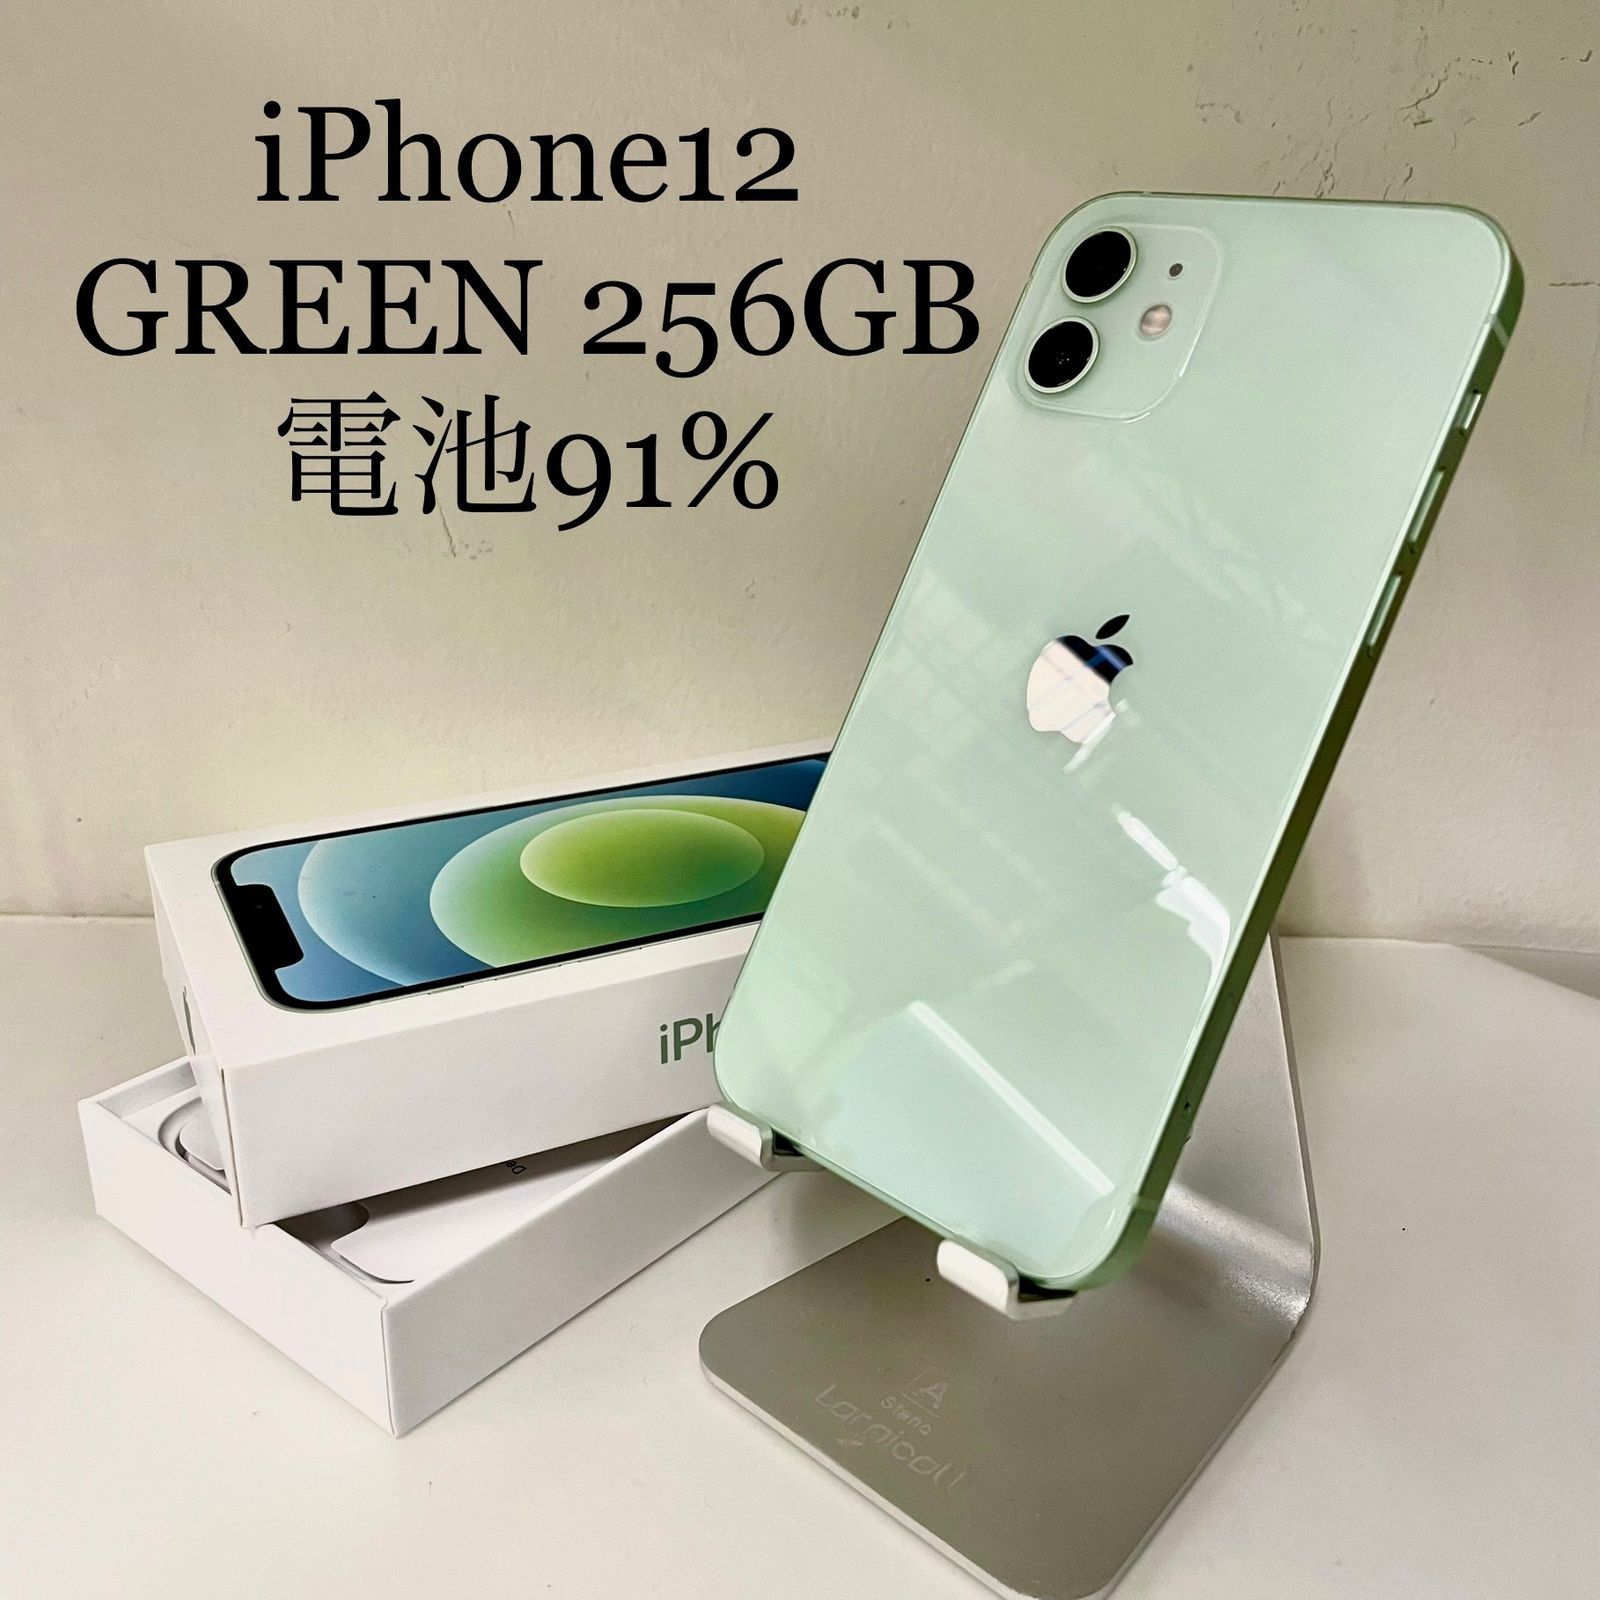 iPhone12 グリーン 256GB 電池残量91% - メルカリ